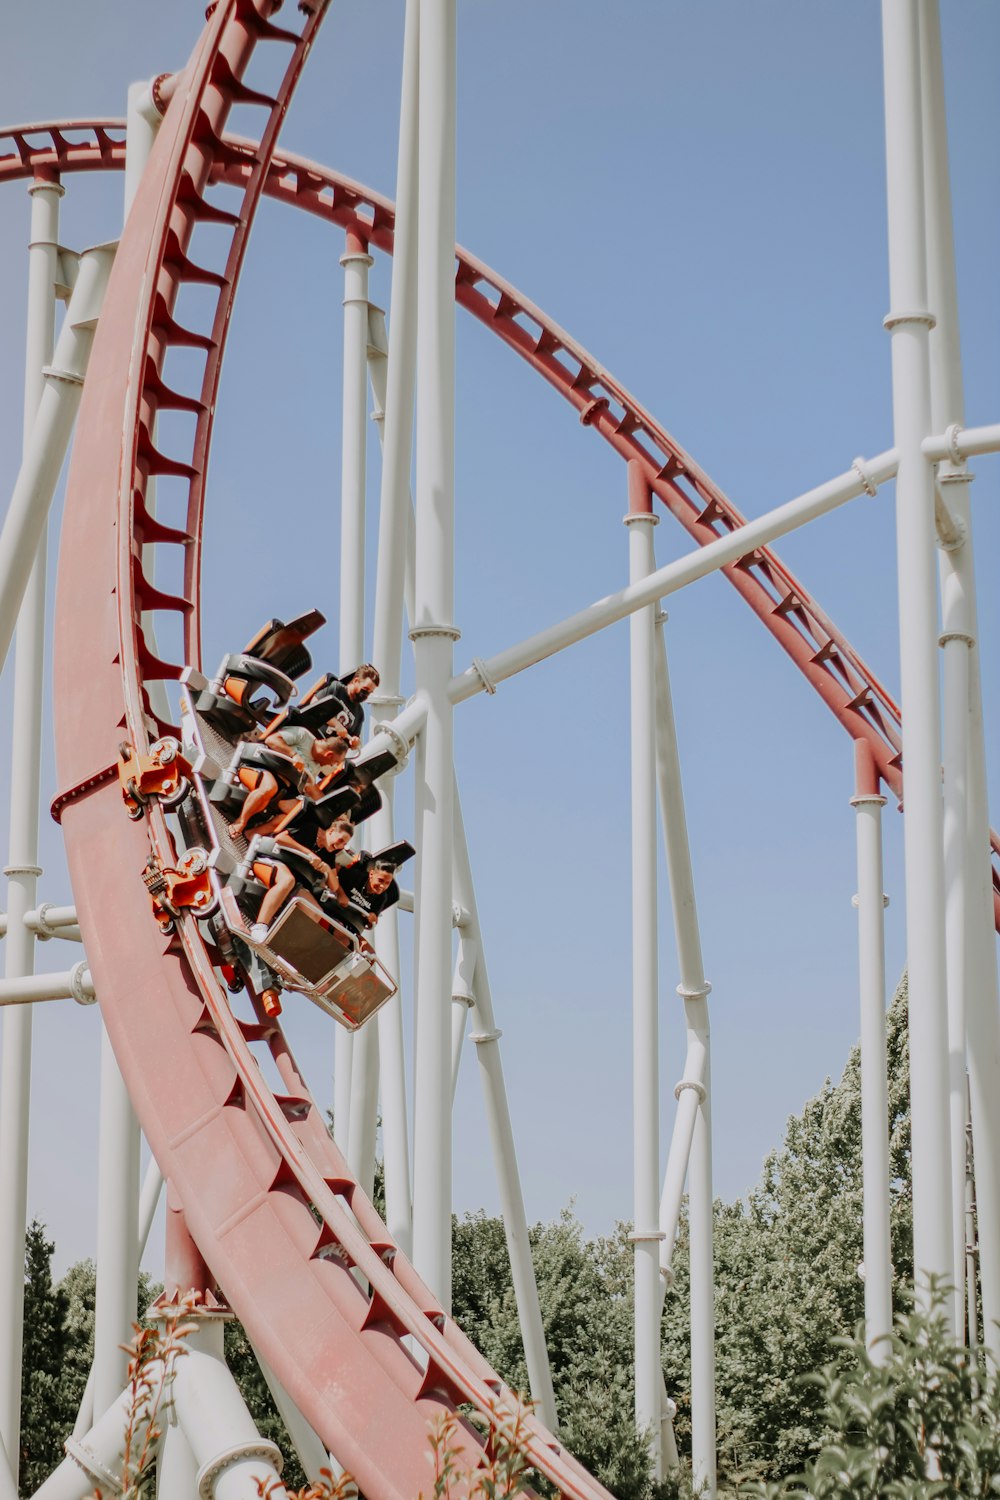 people riding roller coaster during daytime